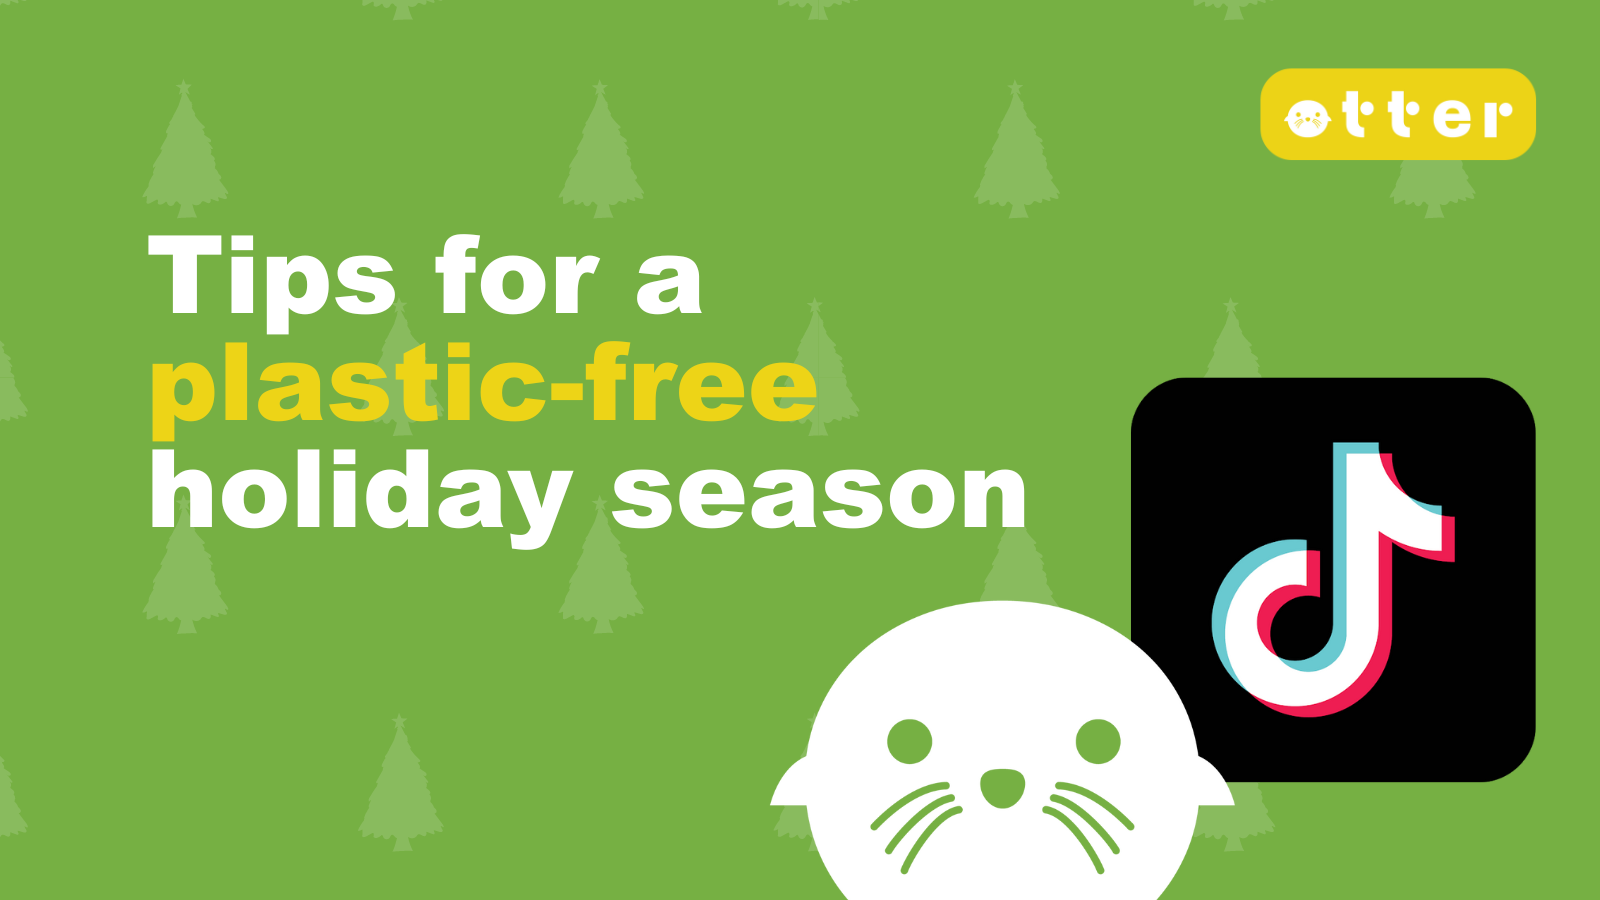 Plastic-free holiday